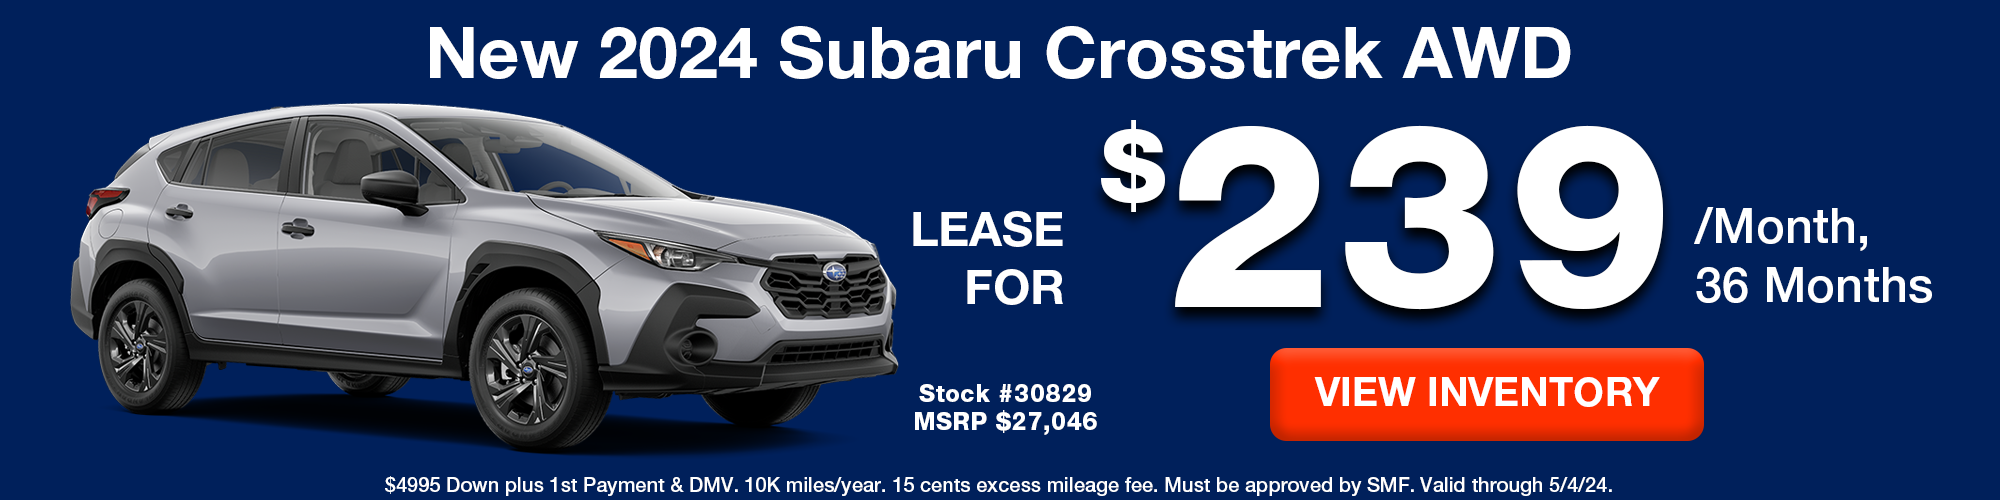 New 2024 Subaru Crosstrek Lease